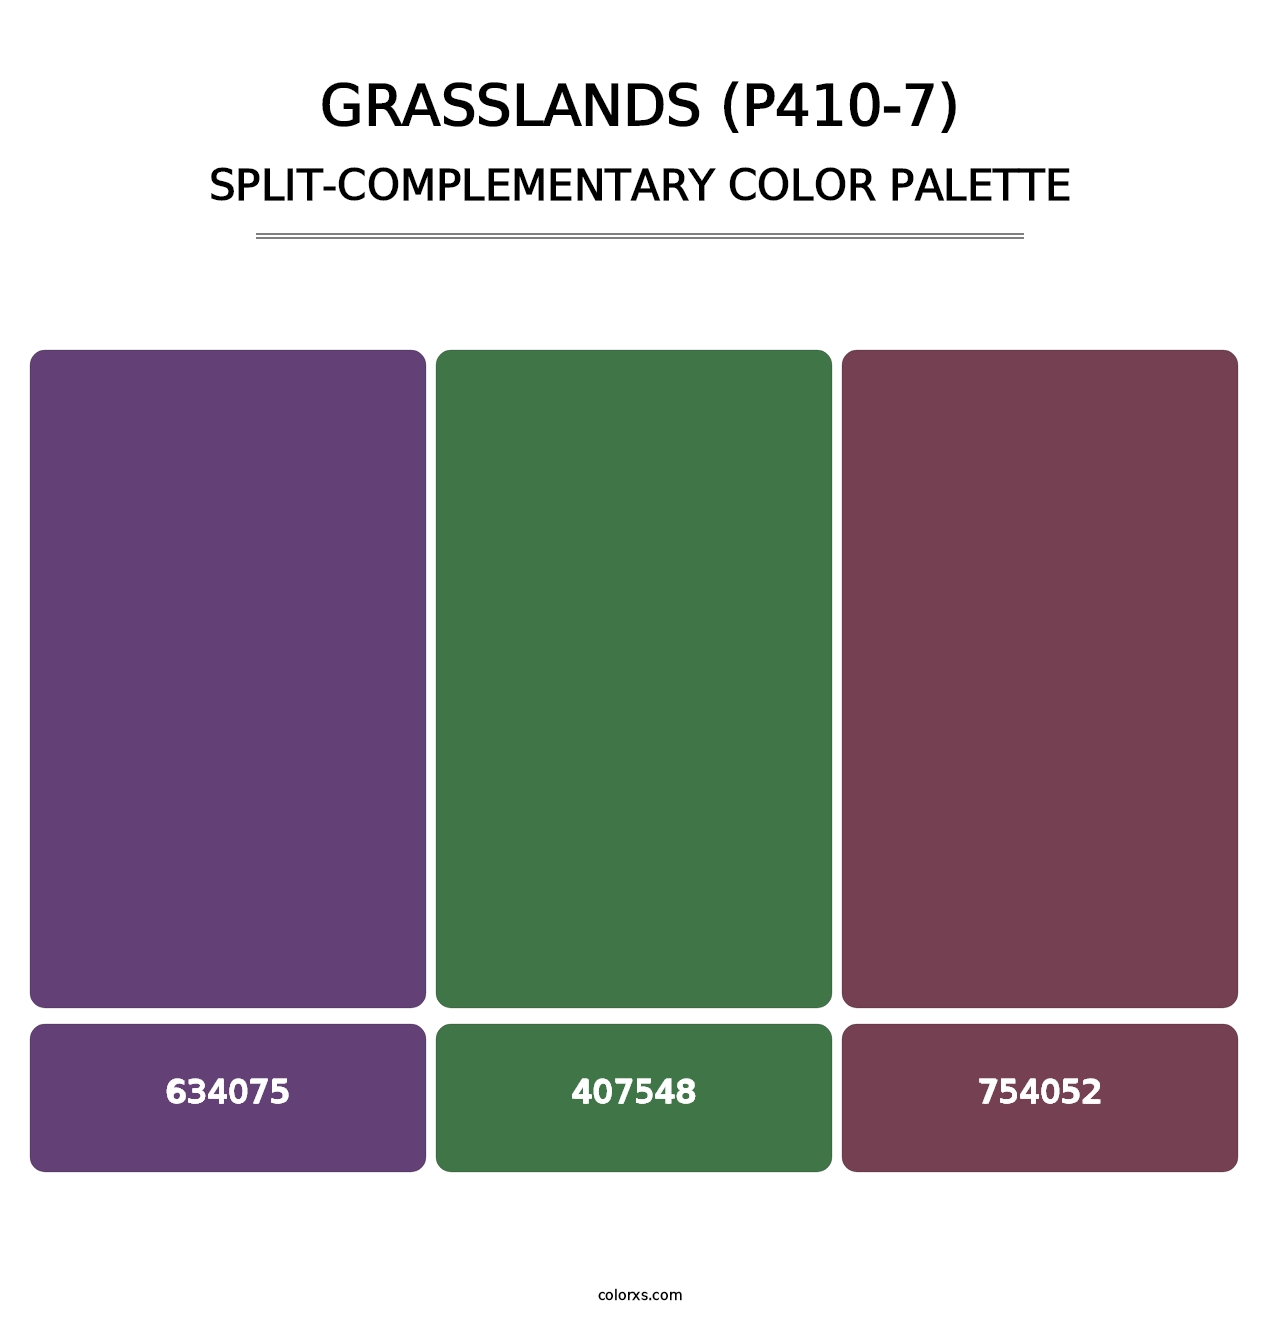 Grasslands (P410-7) - Split-Complementary Color Palette